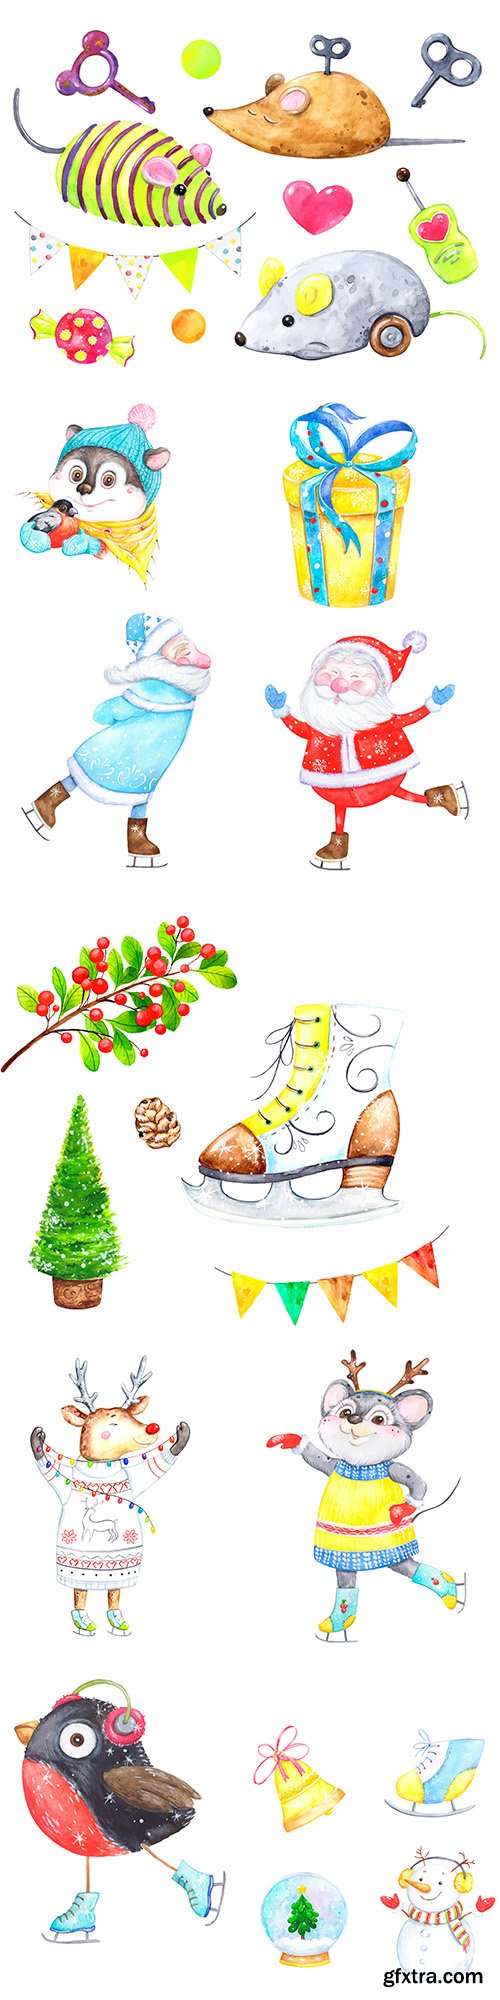 Christmas animals cartoon watercolor illustrations 12